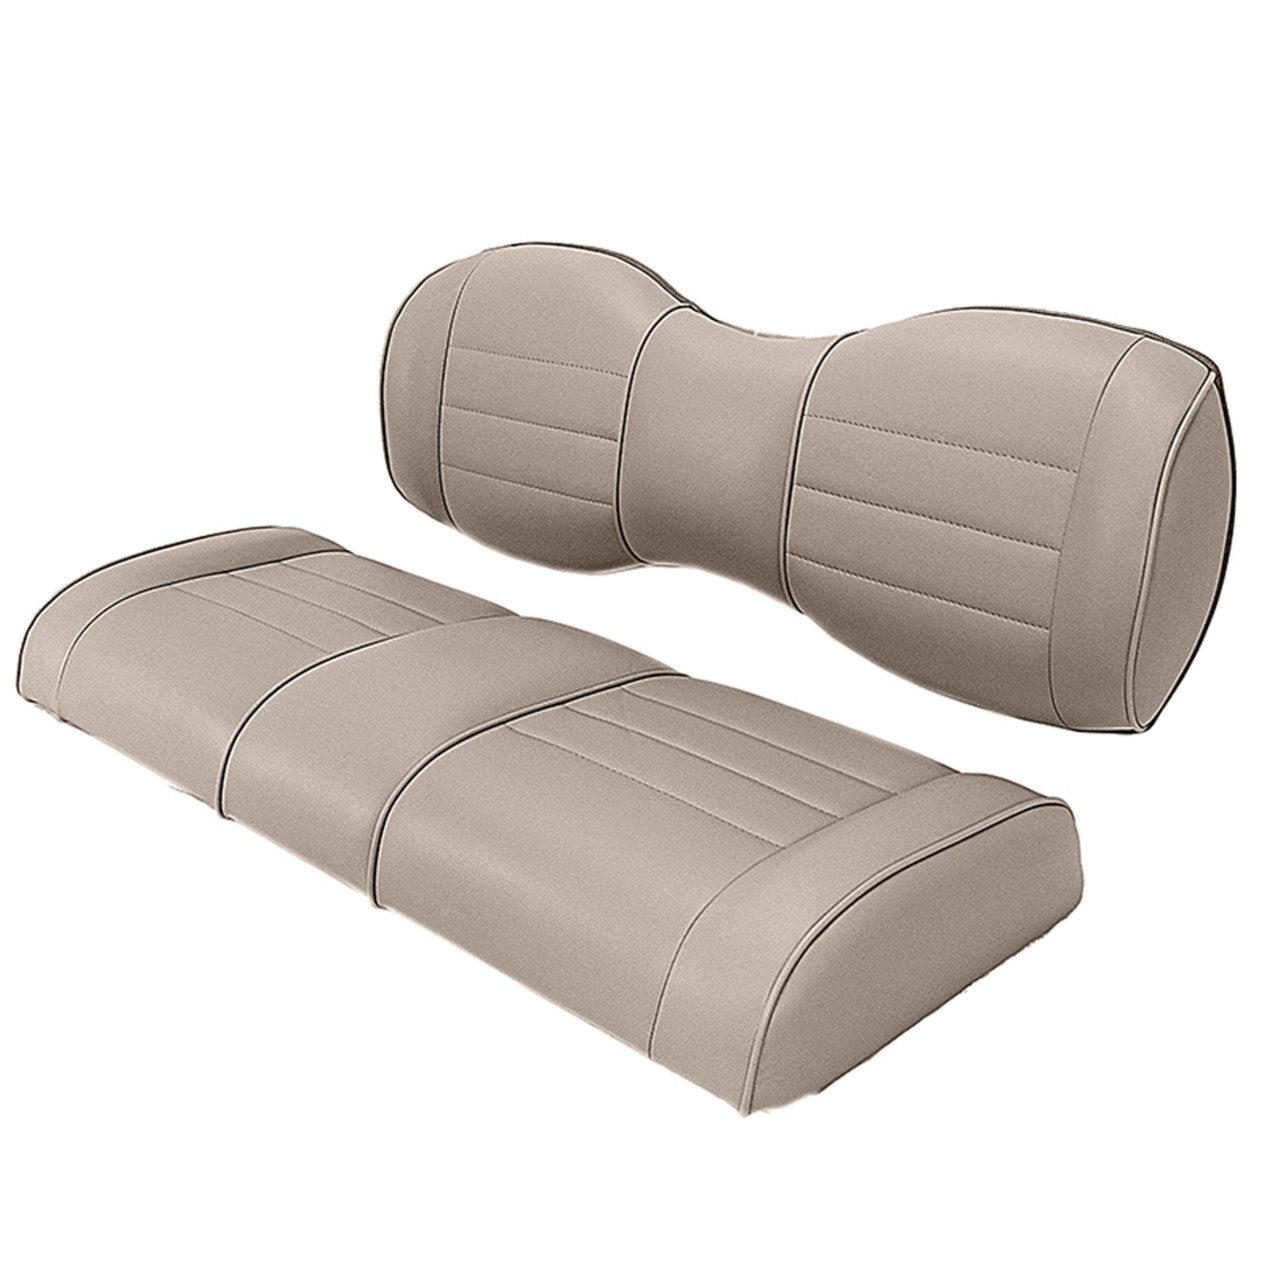 MadJax® Genesis 250/300 OEM Style Replacement Mushroom Seat Assemblies
Item # 10-502-BR07